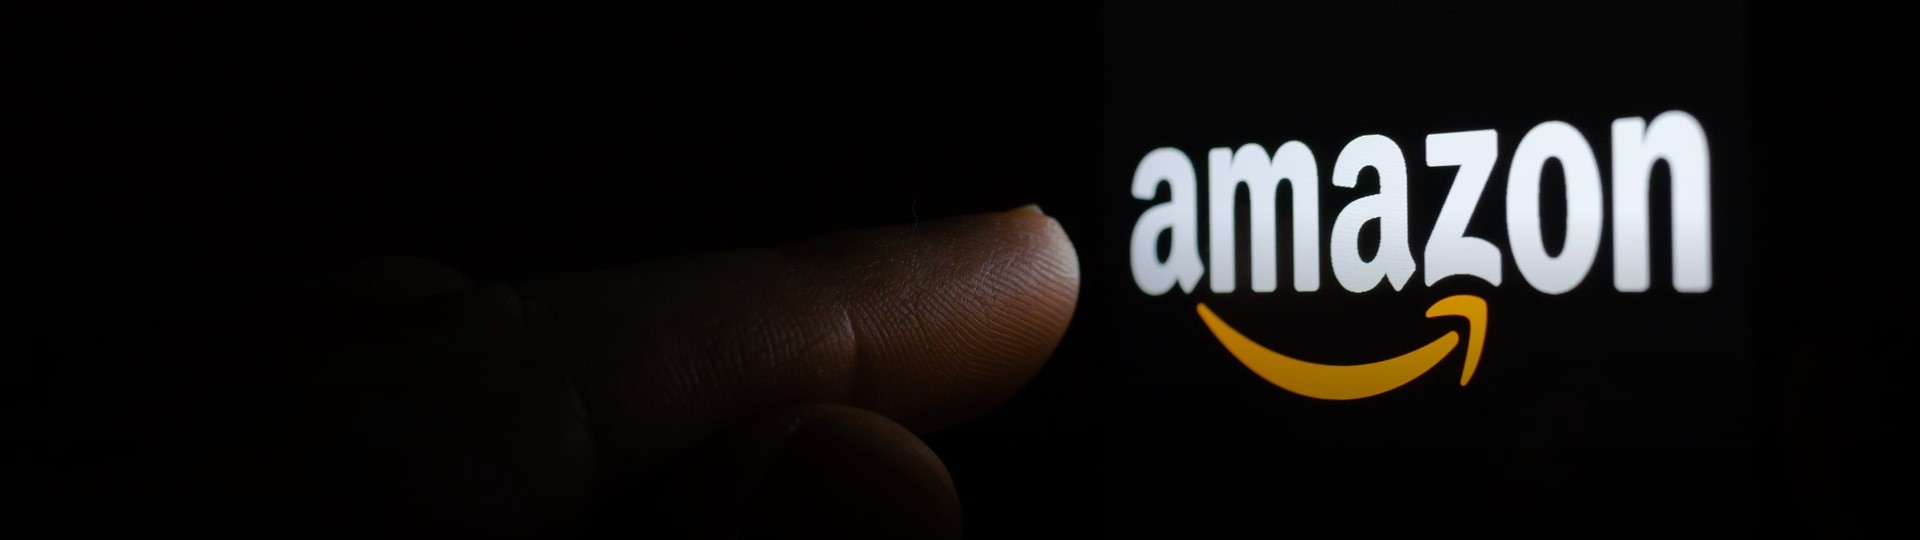 Amazon nemusí doplácet miliardové daně